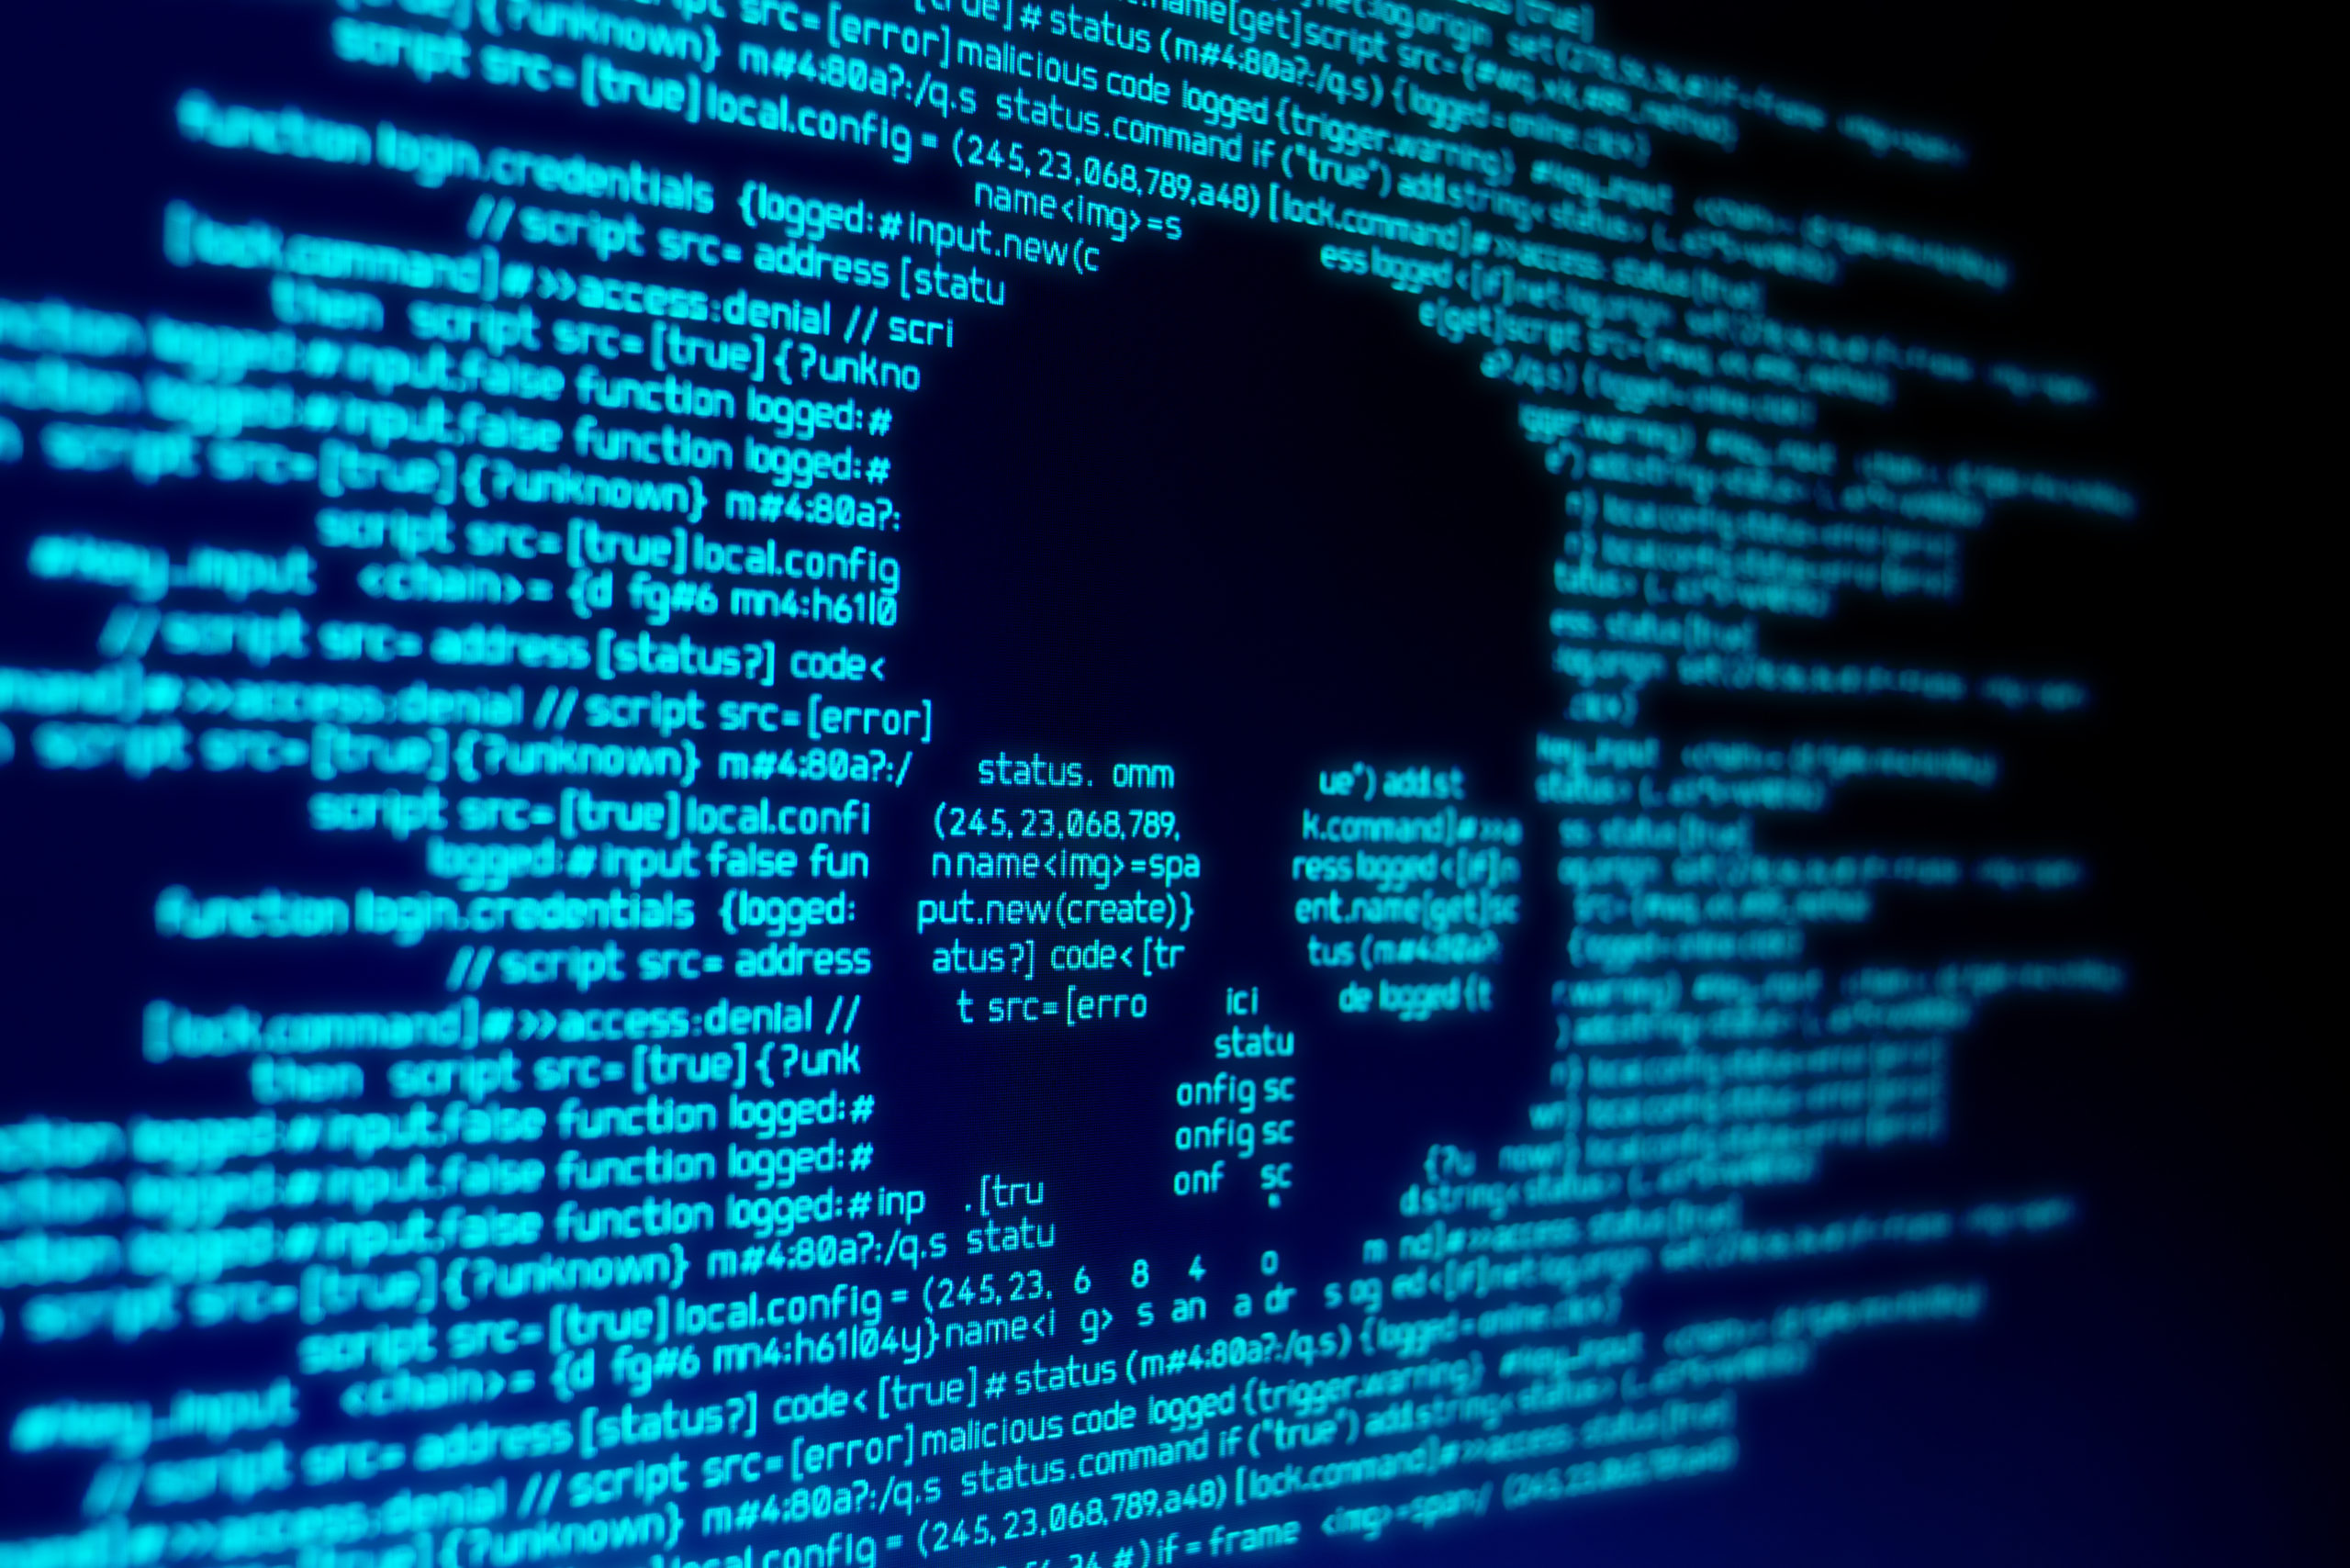 Ransomware, a major threat